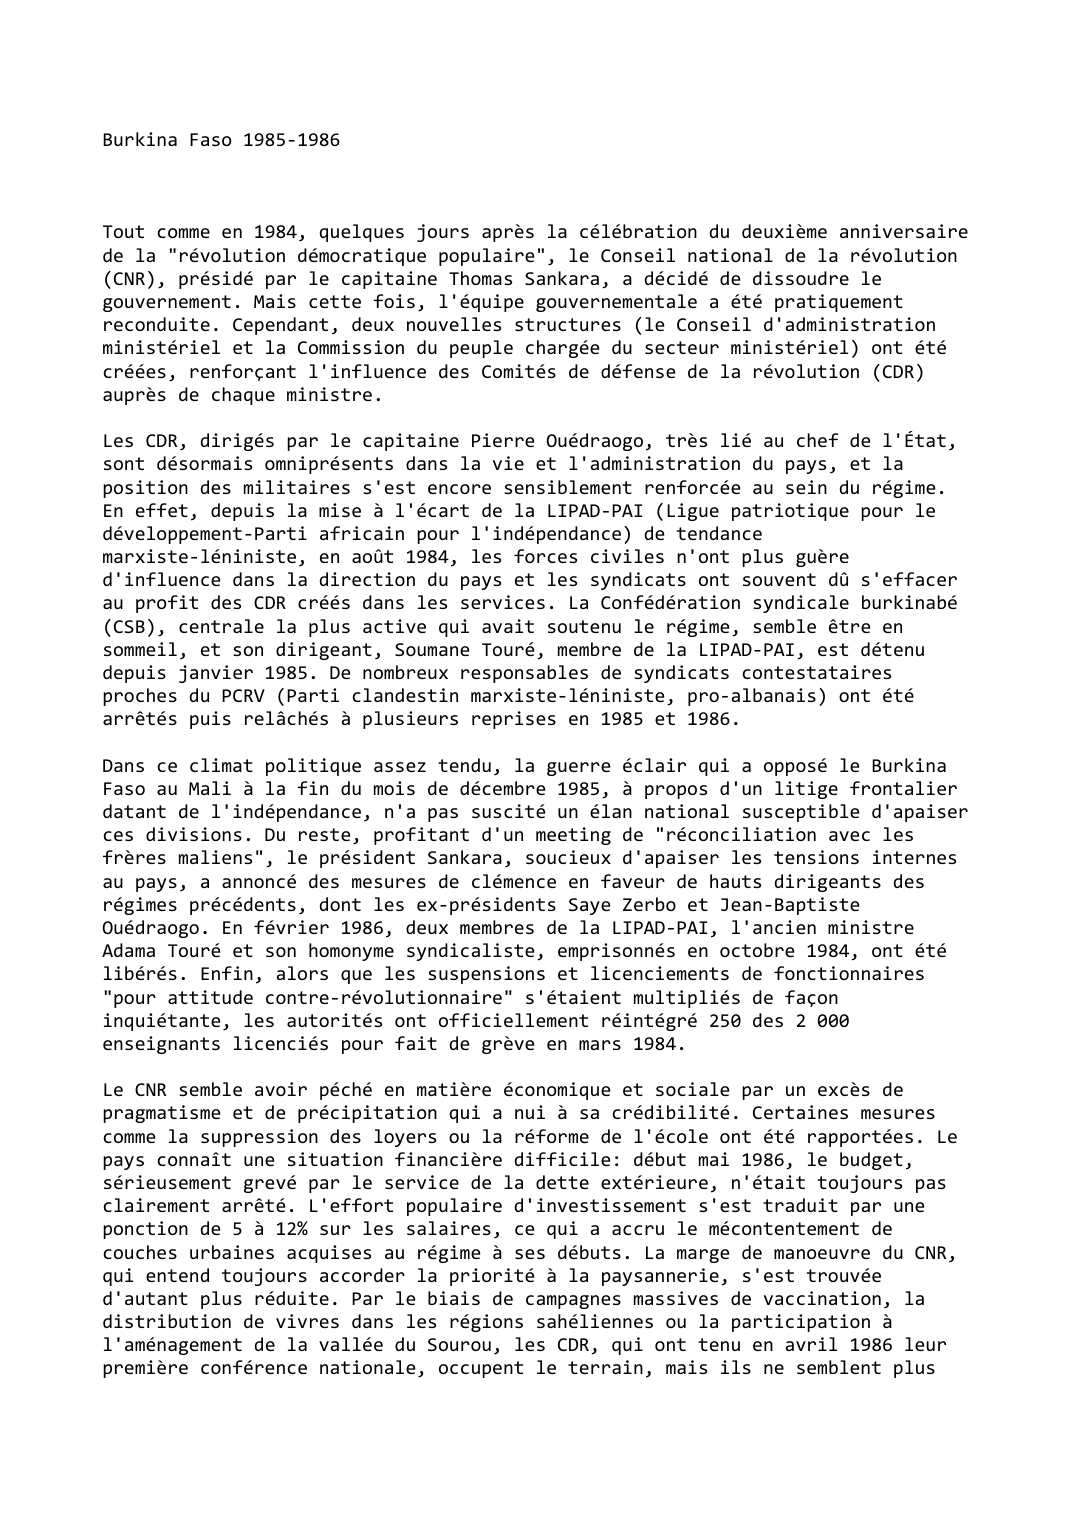 Prévisualisation du document Burkina Faso ( 1985-1986)